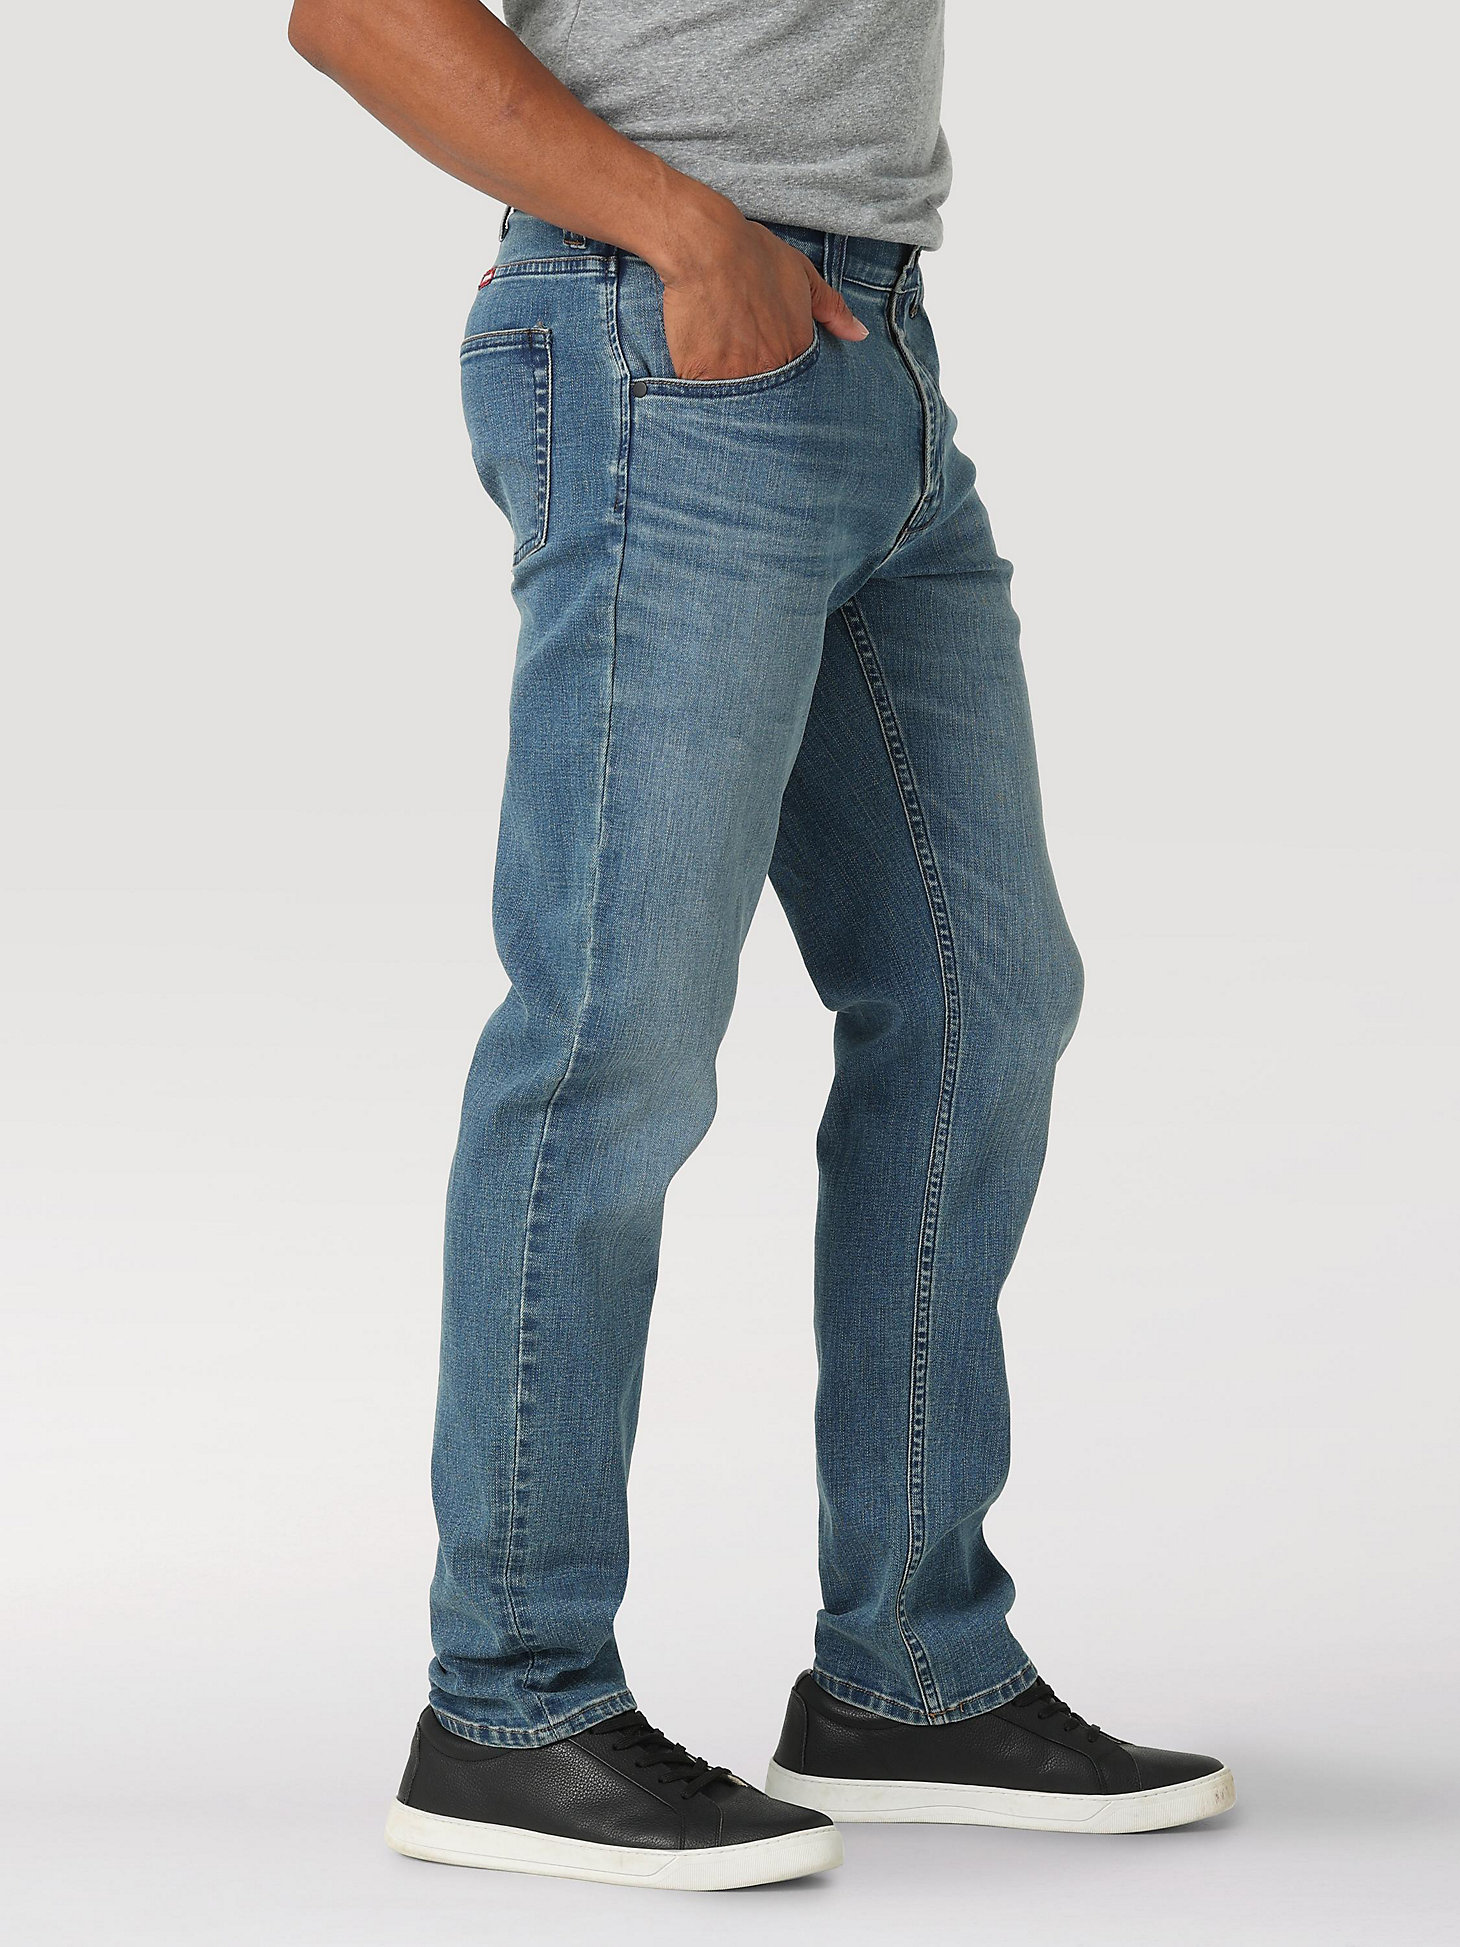 Men's Ultra Flex Slim Fit Jean in Jett alternative view 2